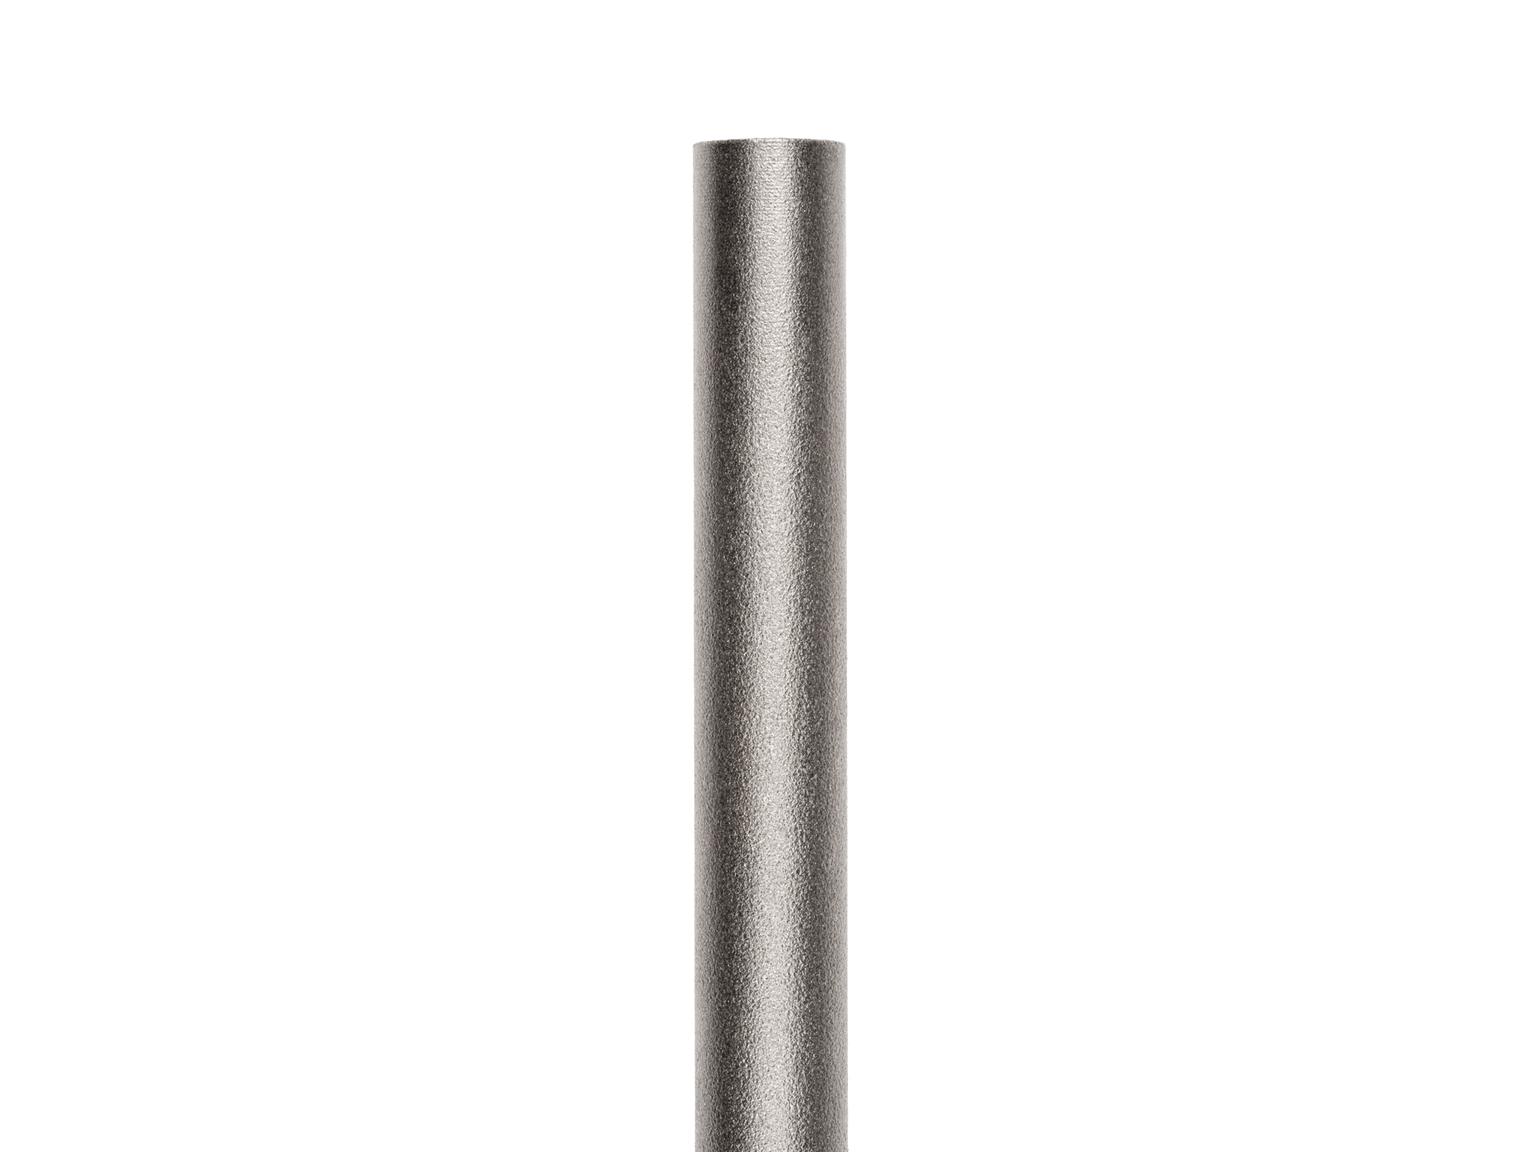 TEKTON 66059-T 3/8 Inch Pin Punch